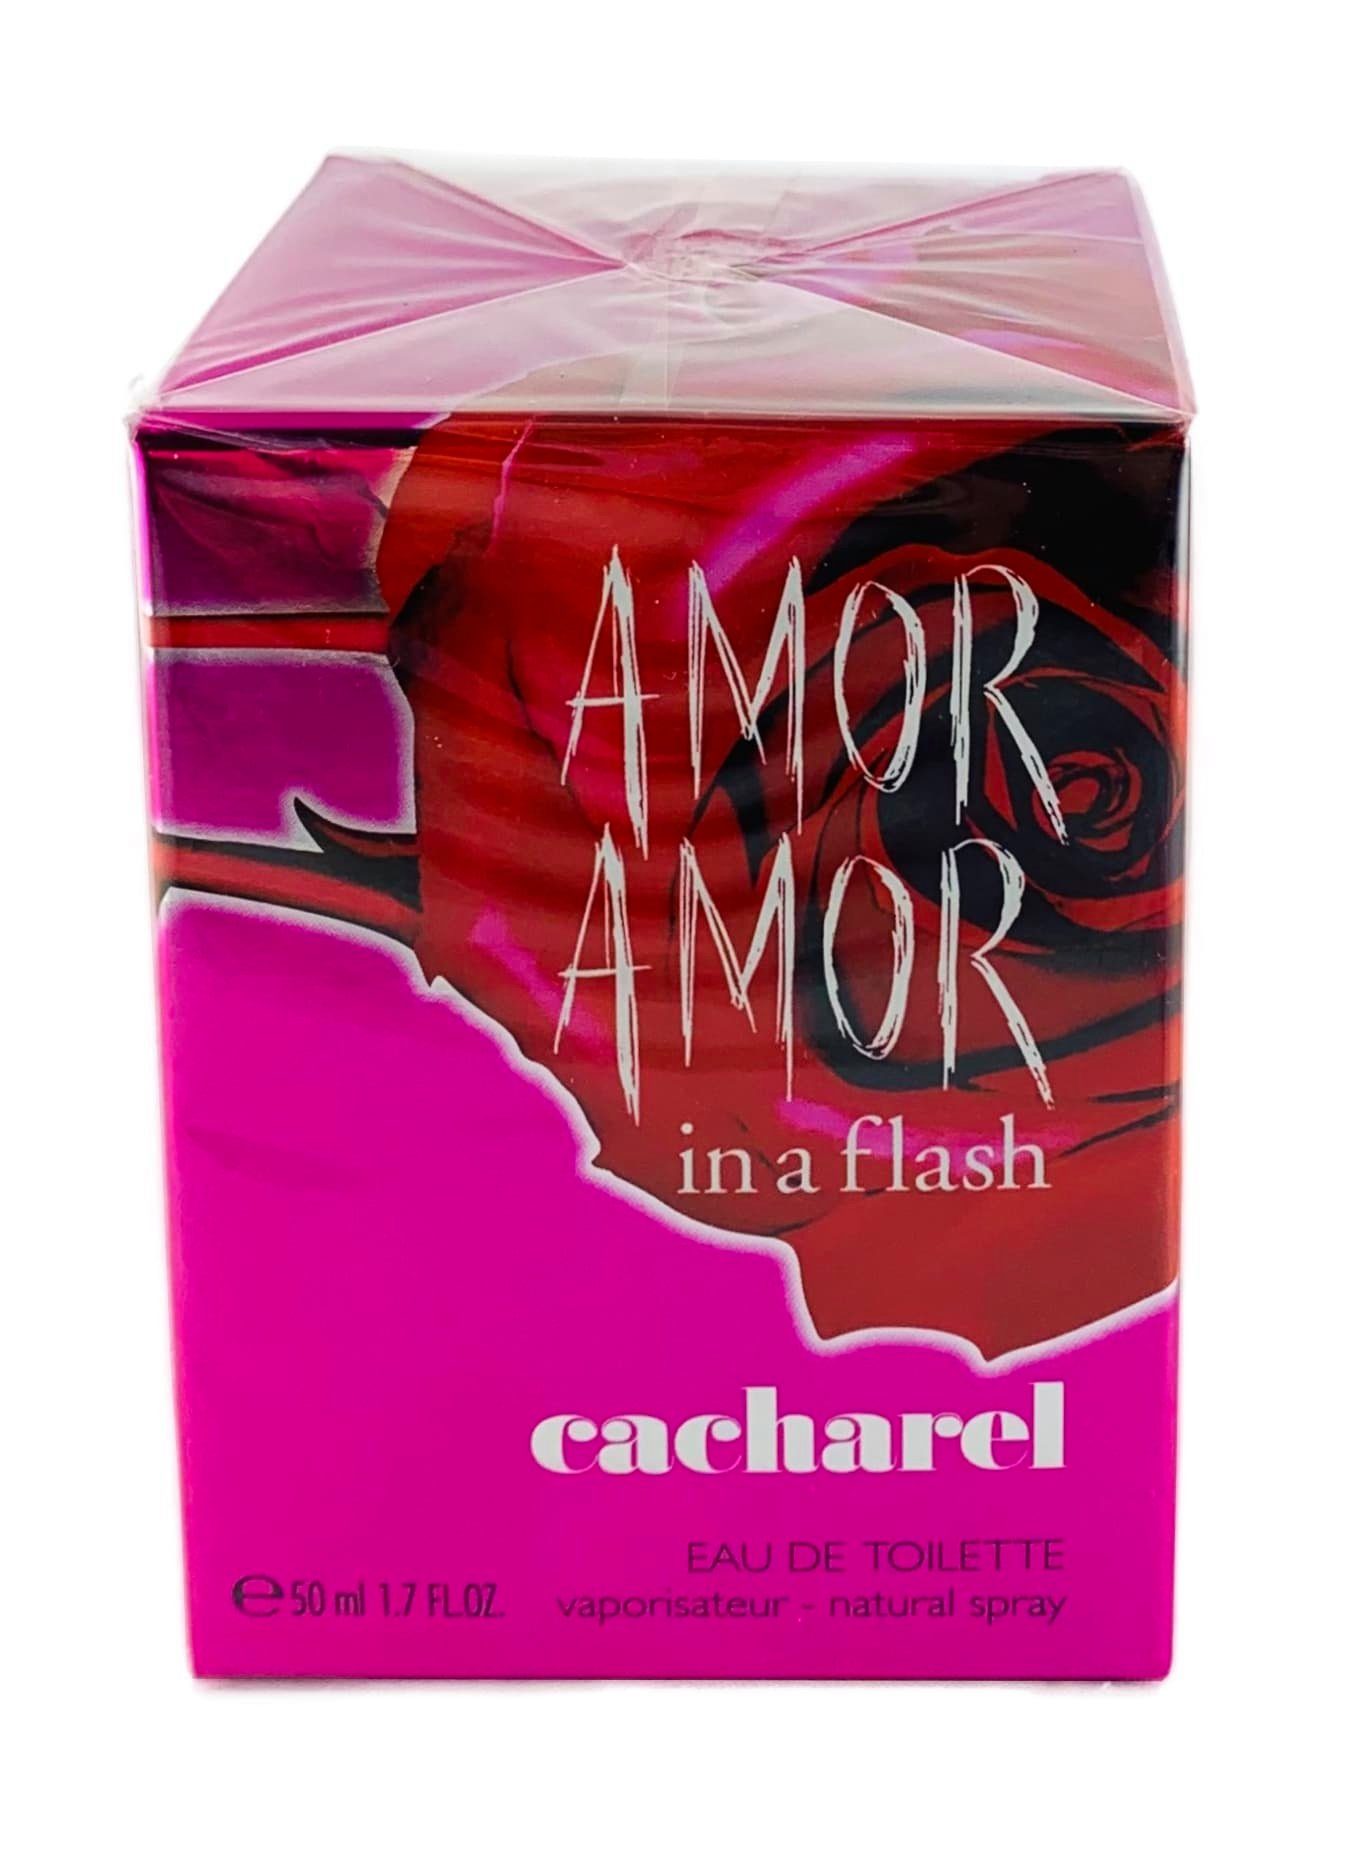 CACHAREL Eau de Toilette Cacharel "Amor in a Flash" Edt Spray 50 ml